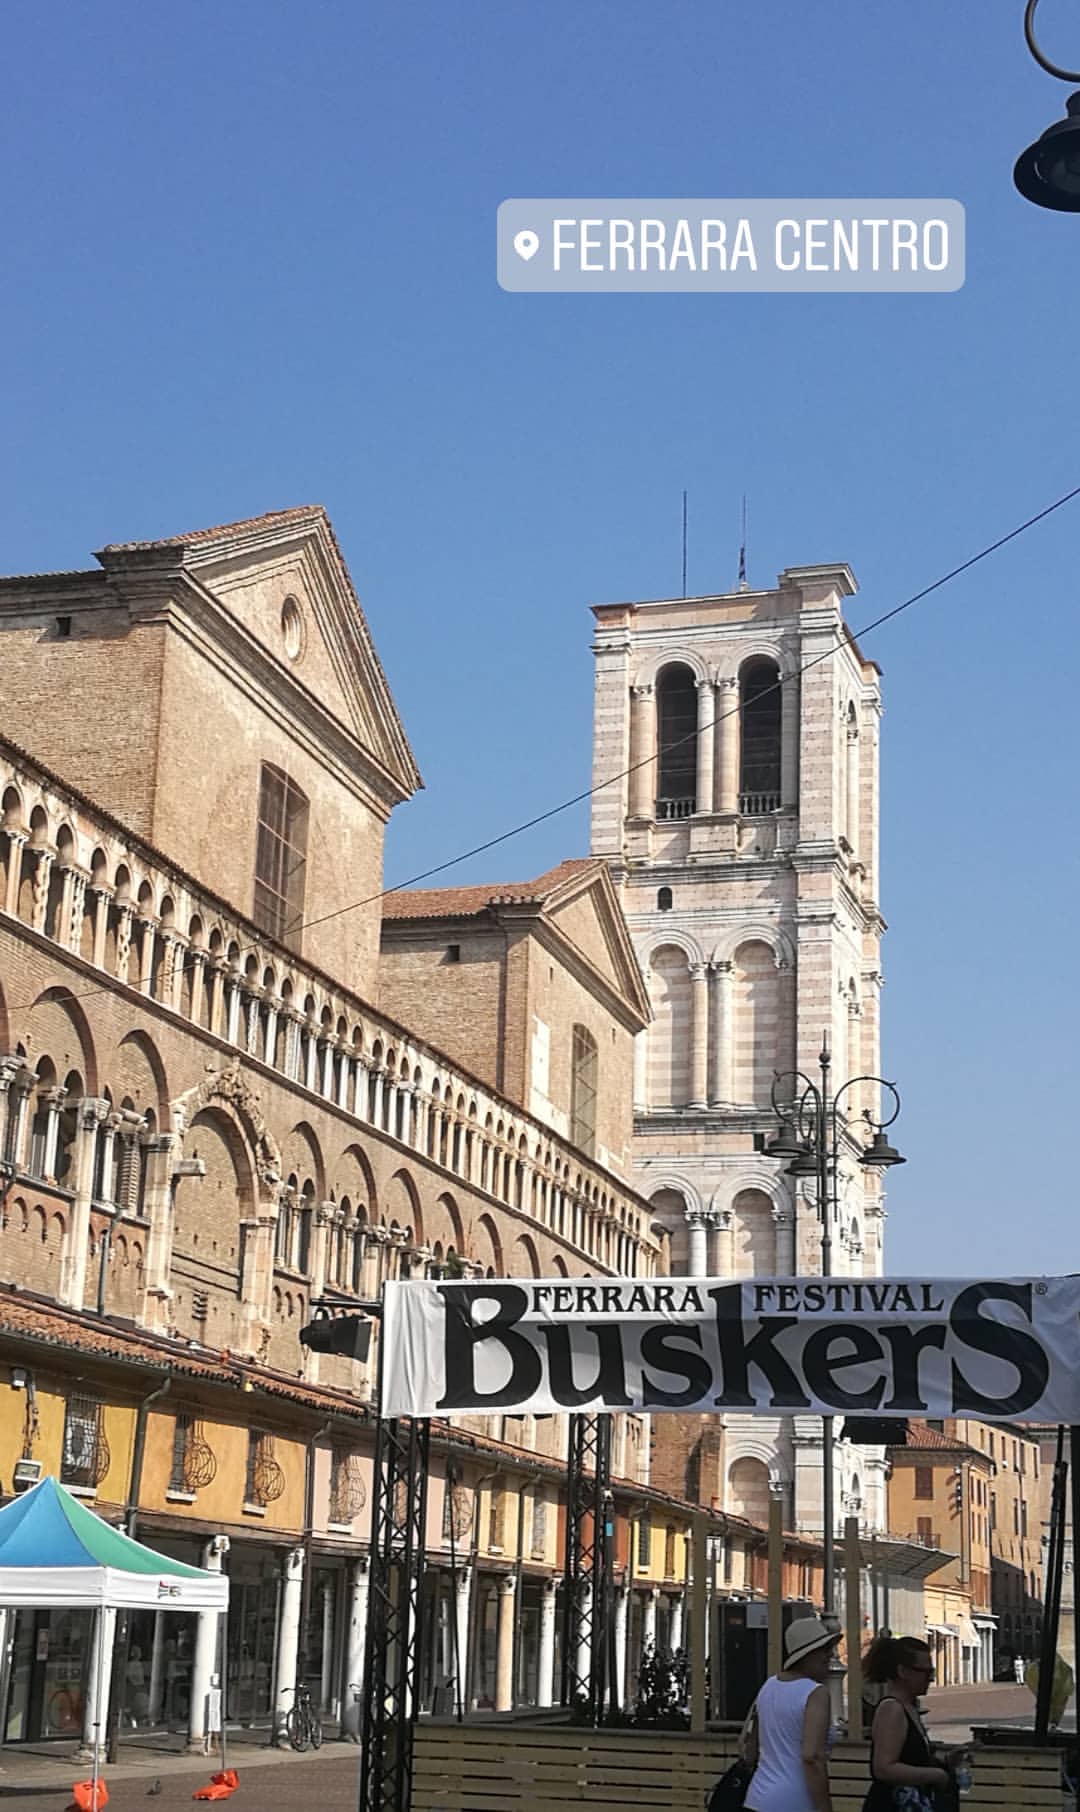 IG stories - Ferrara Buskers Festival